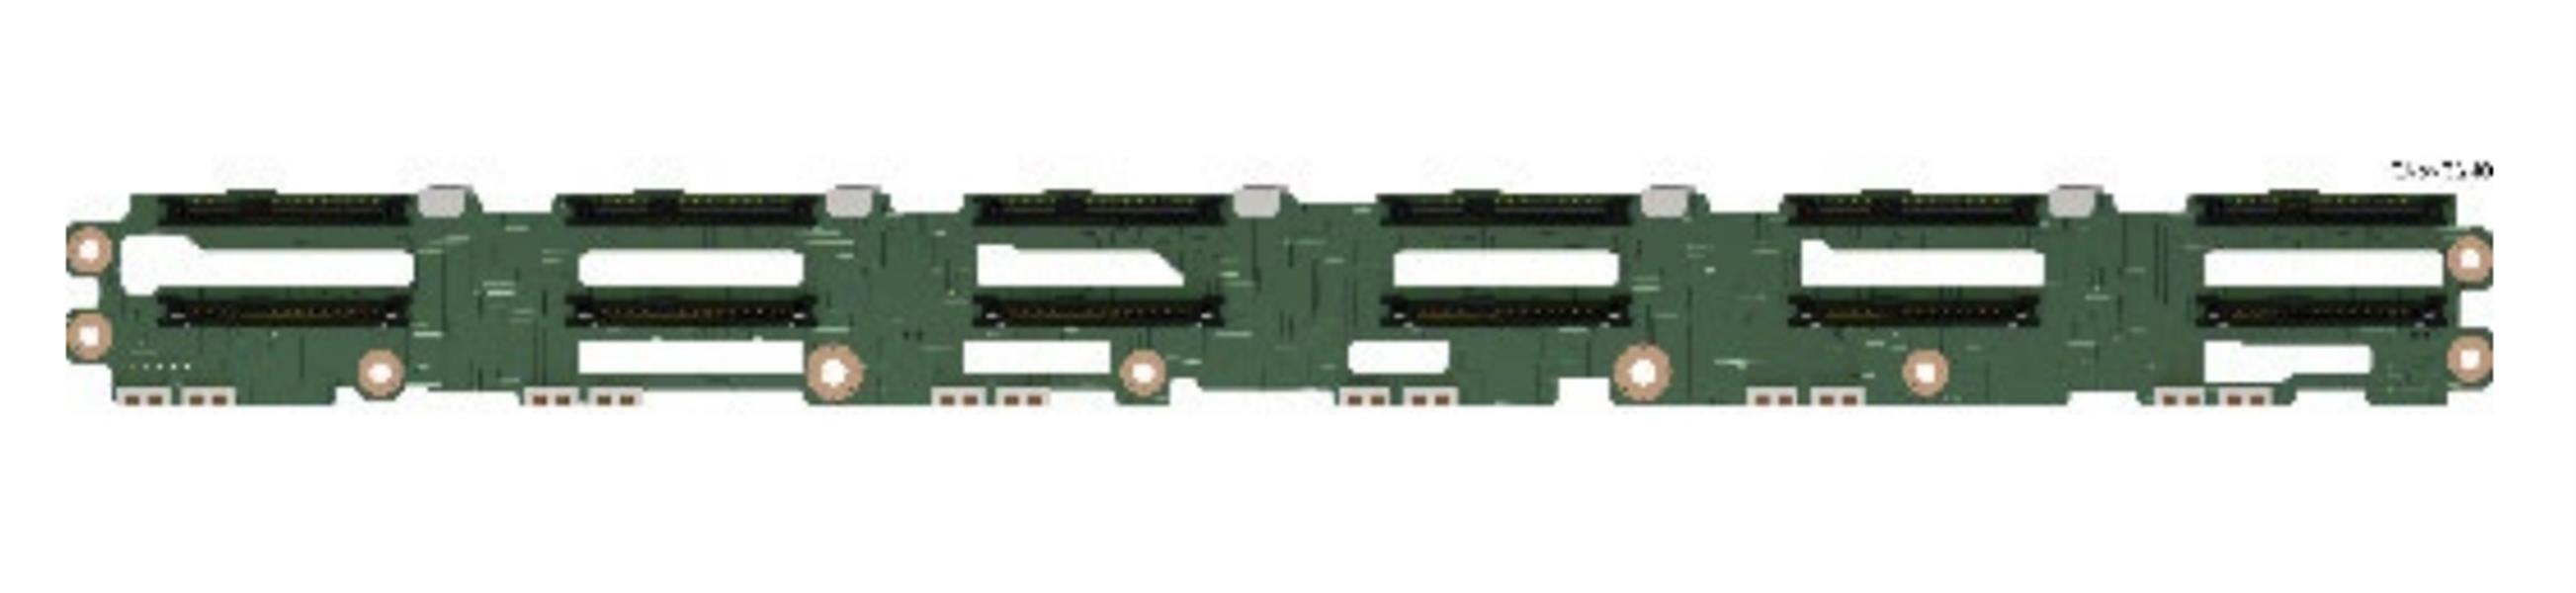 Intel Backplaneboard für M50CYP1UR212